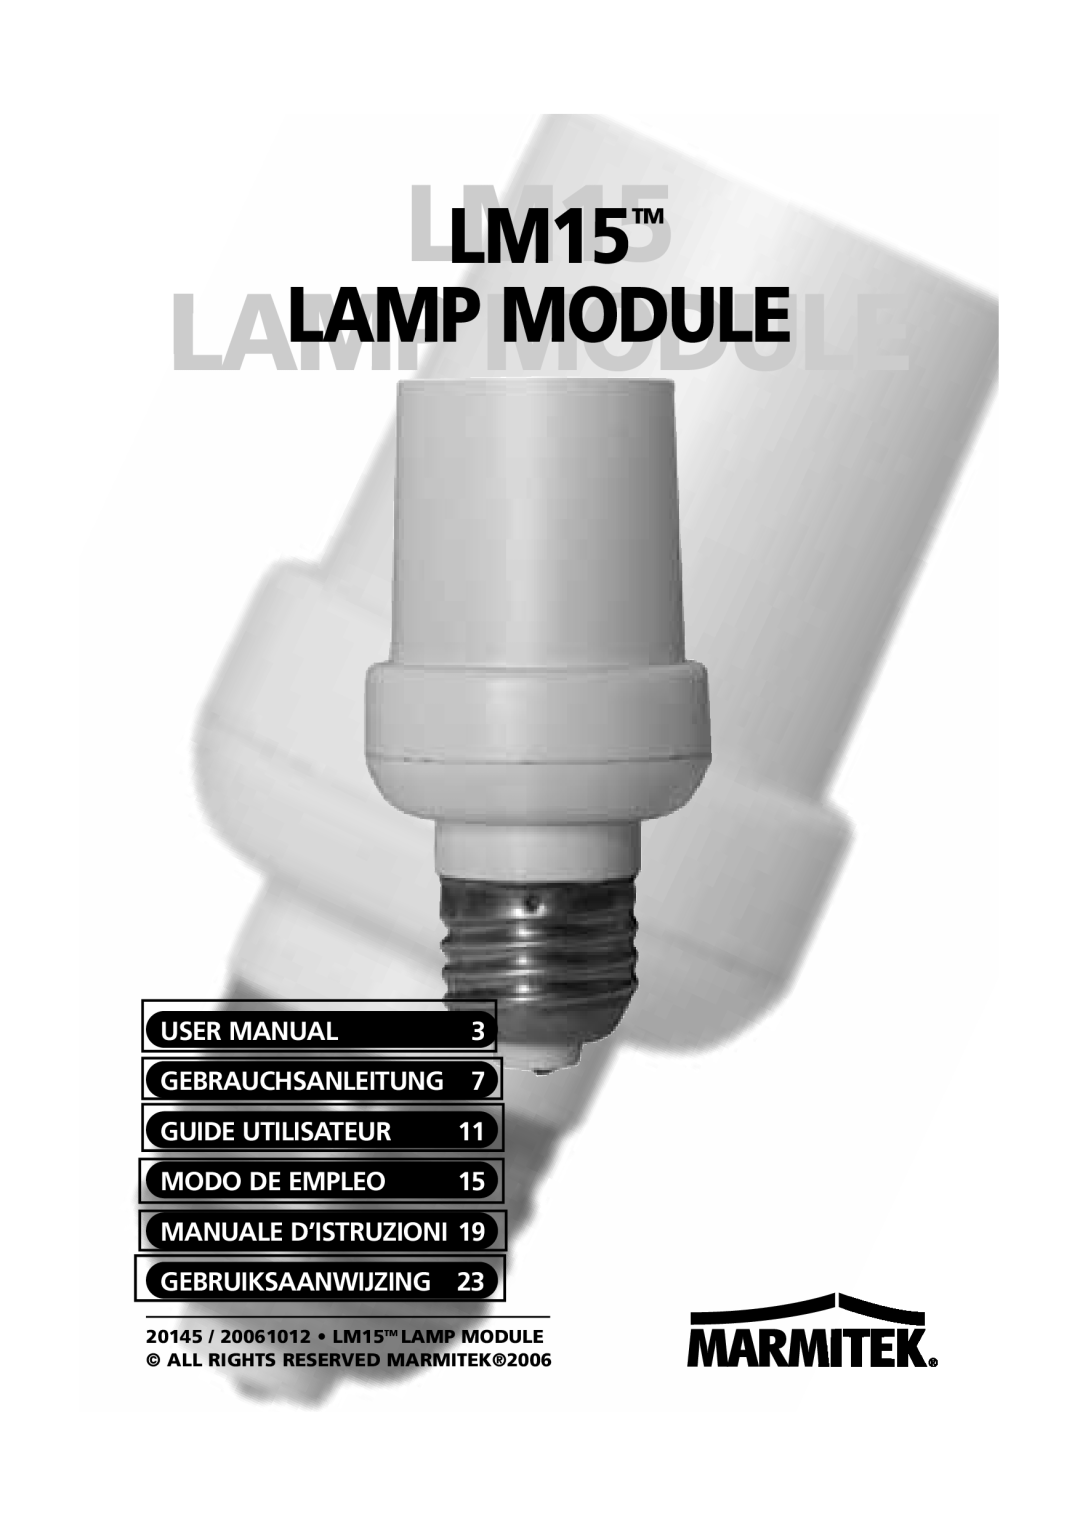 Marmitek user manual LM15LM15TM, Lamplampmodulemodule, Guide Utilisateur, Modo De Empleo, Gebruiksaanwijzing 